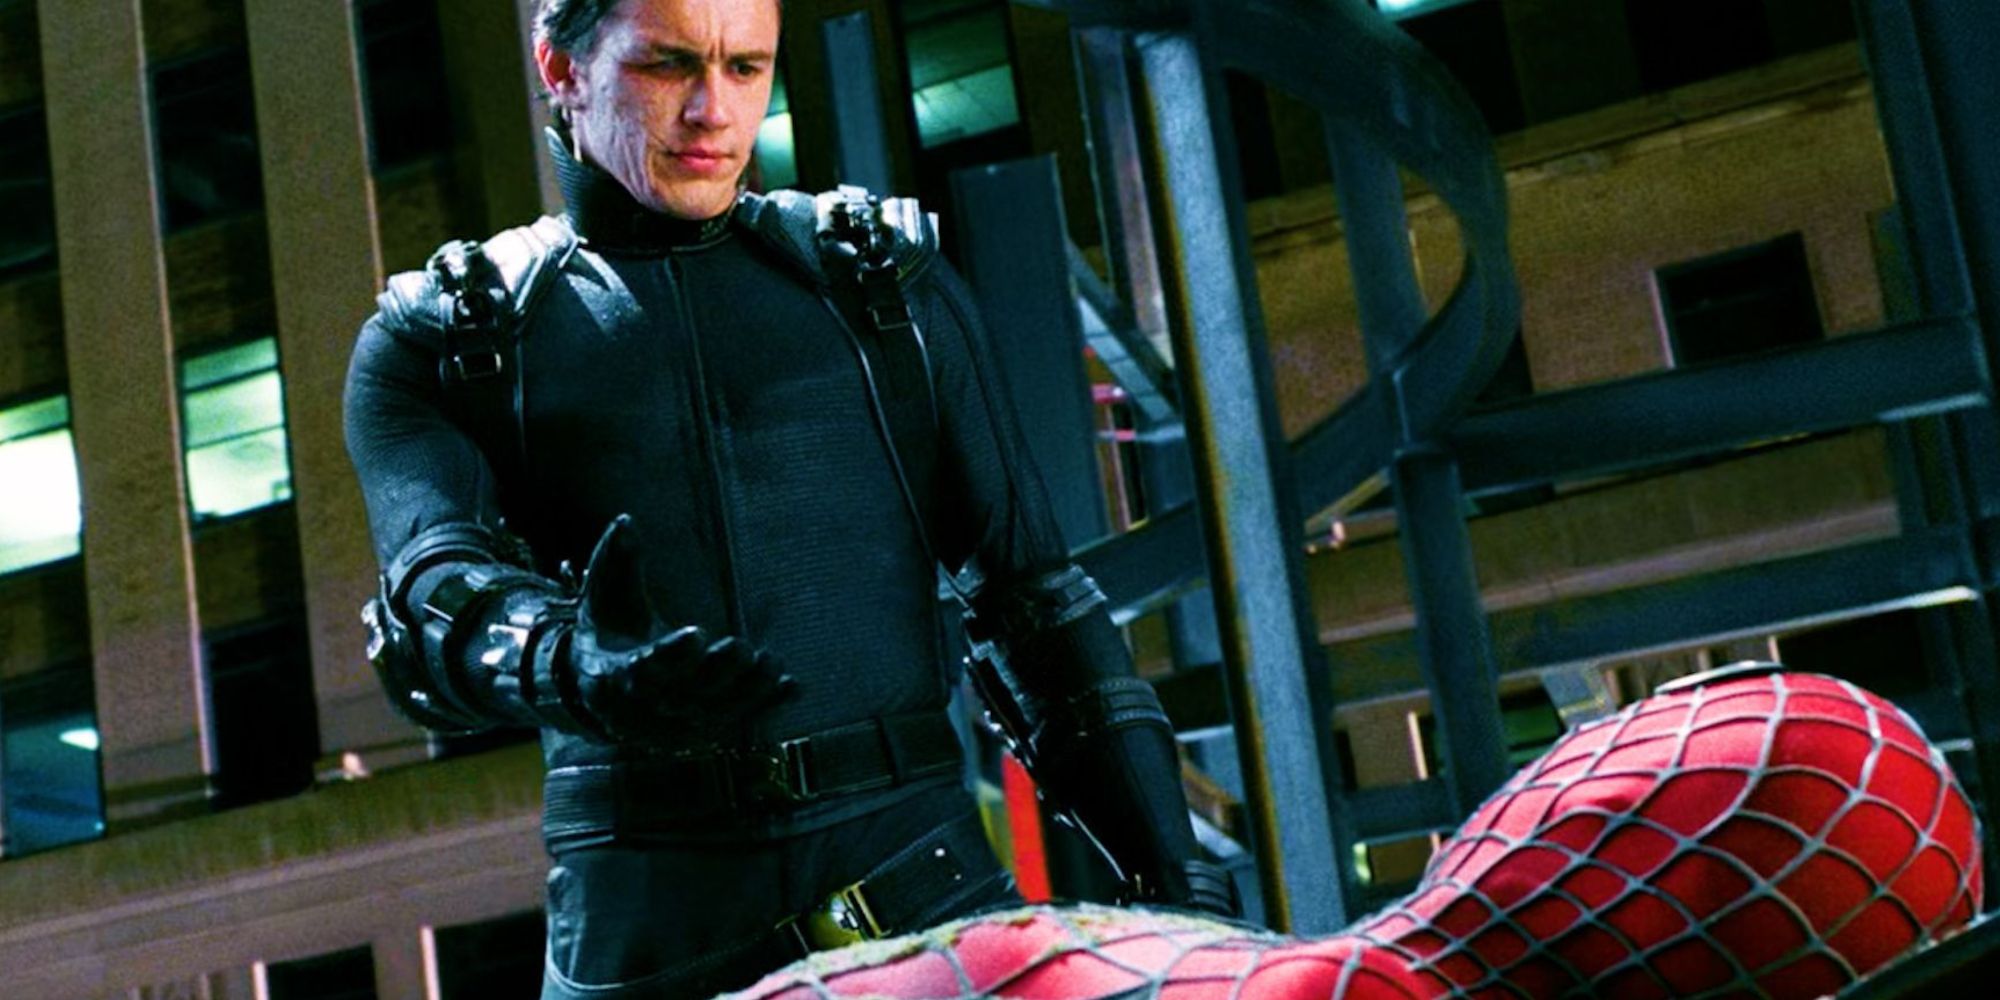 James Franco as Harry Osborn/Green Goblin in Spider-Man 3